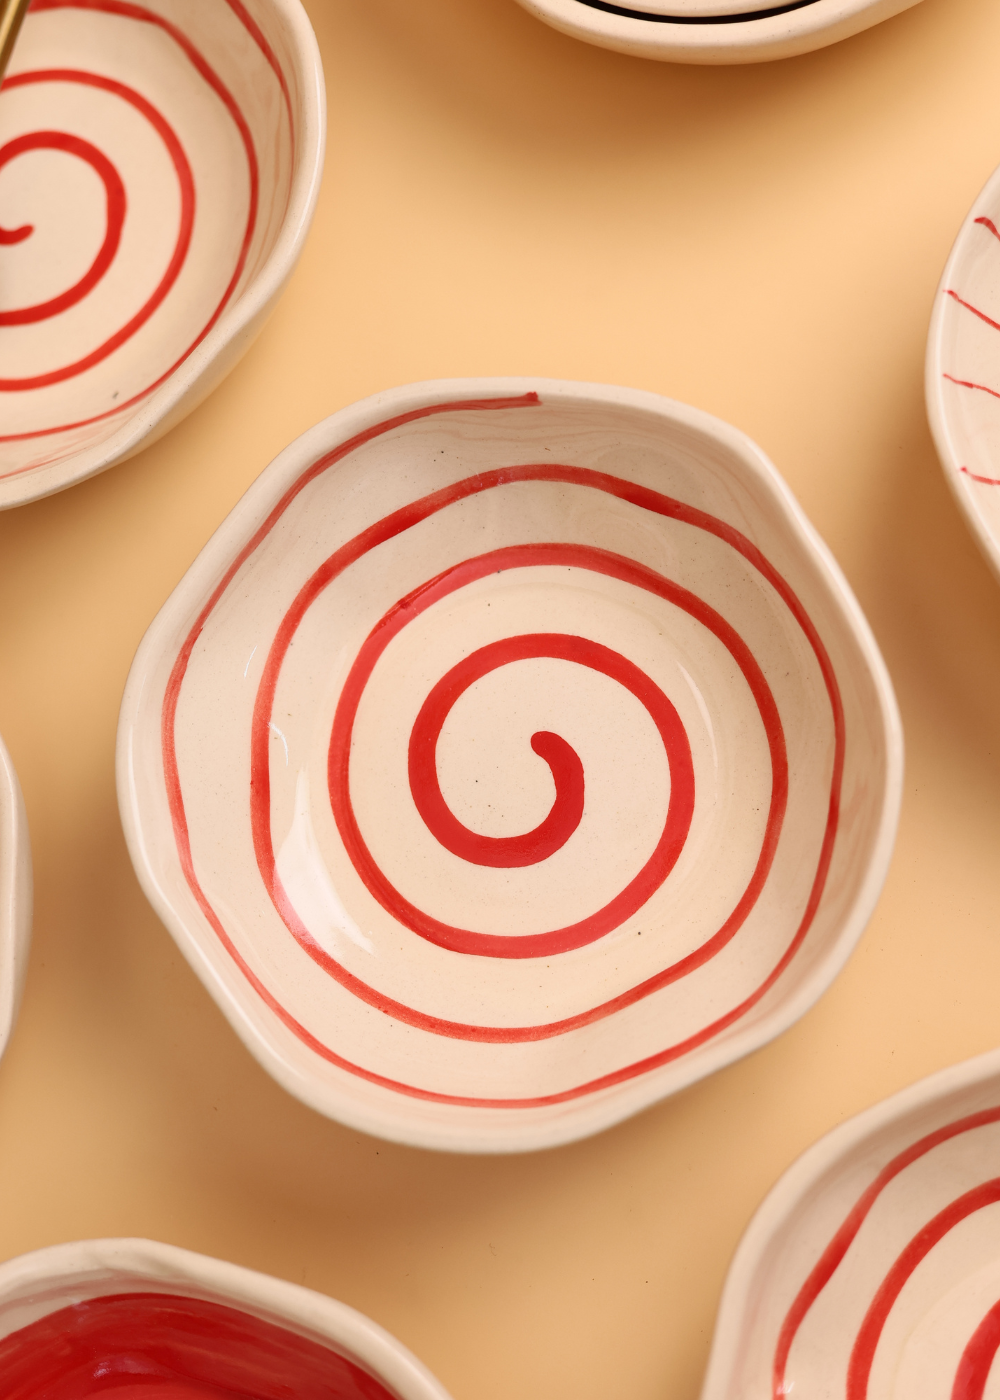 Red & white spiral bowl